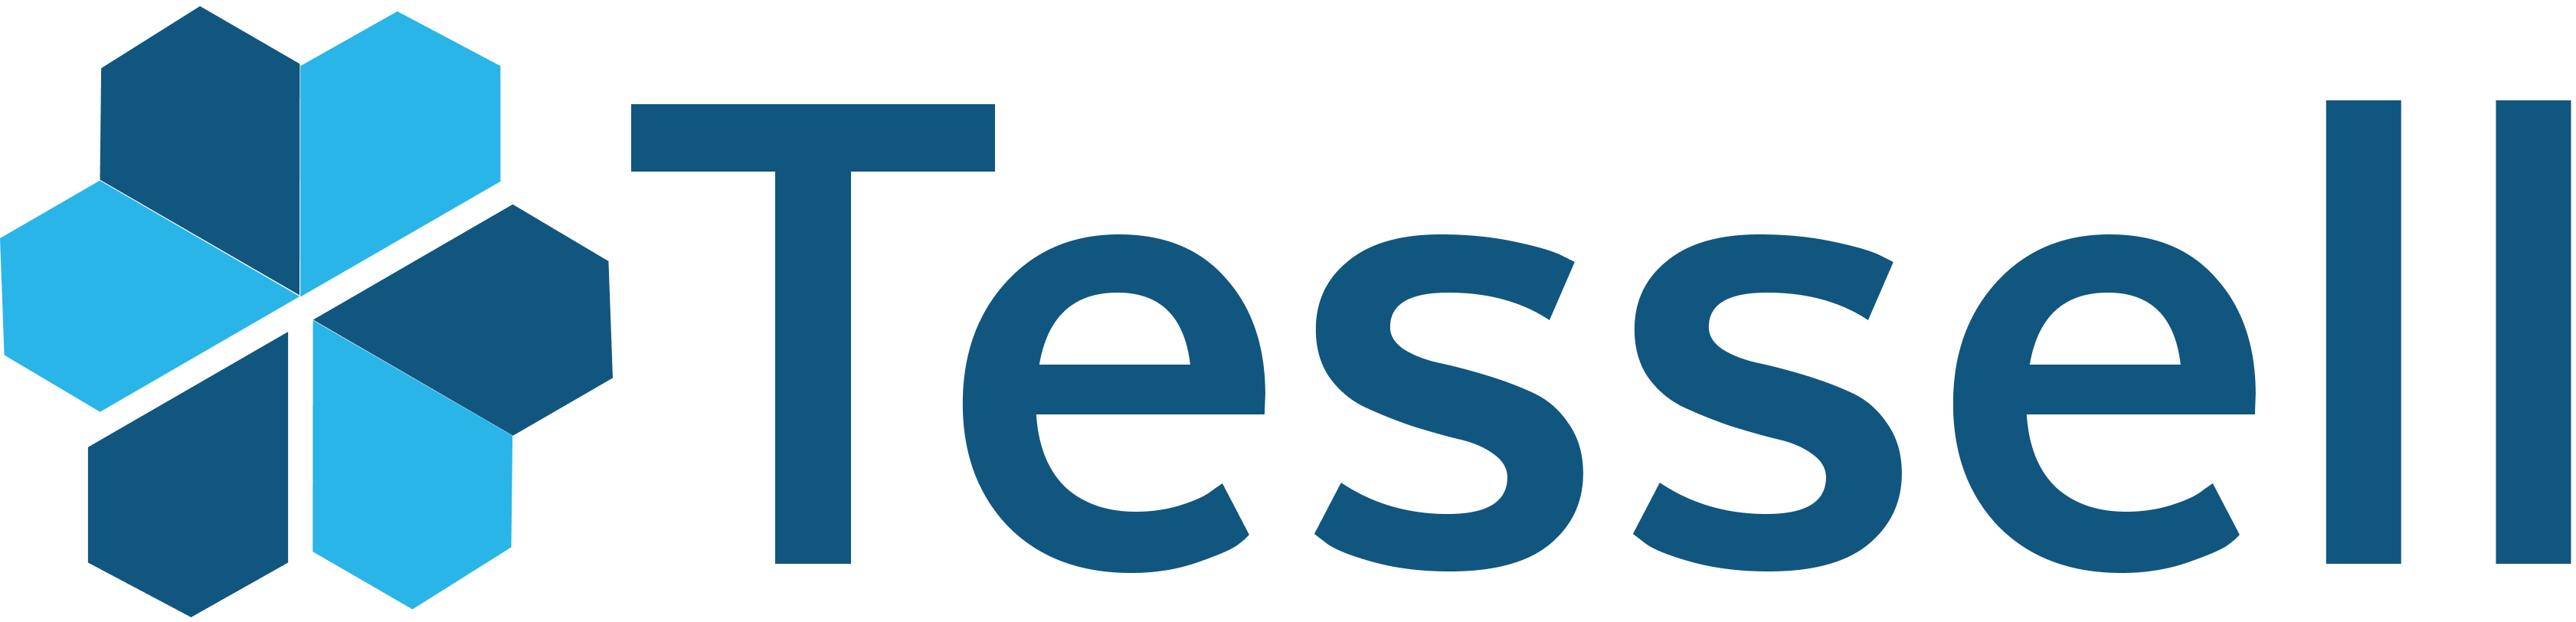 Tessell logo